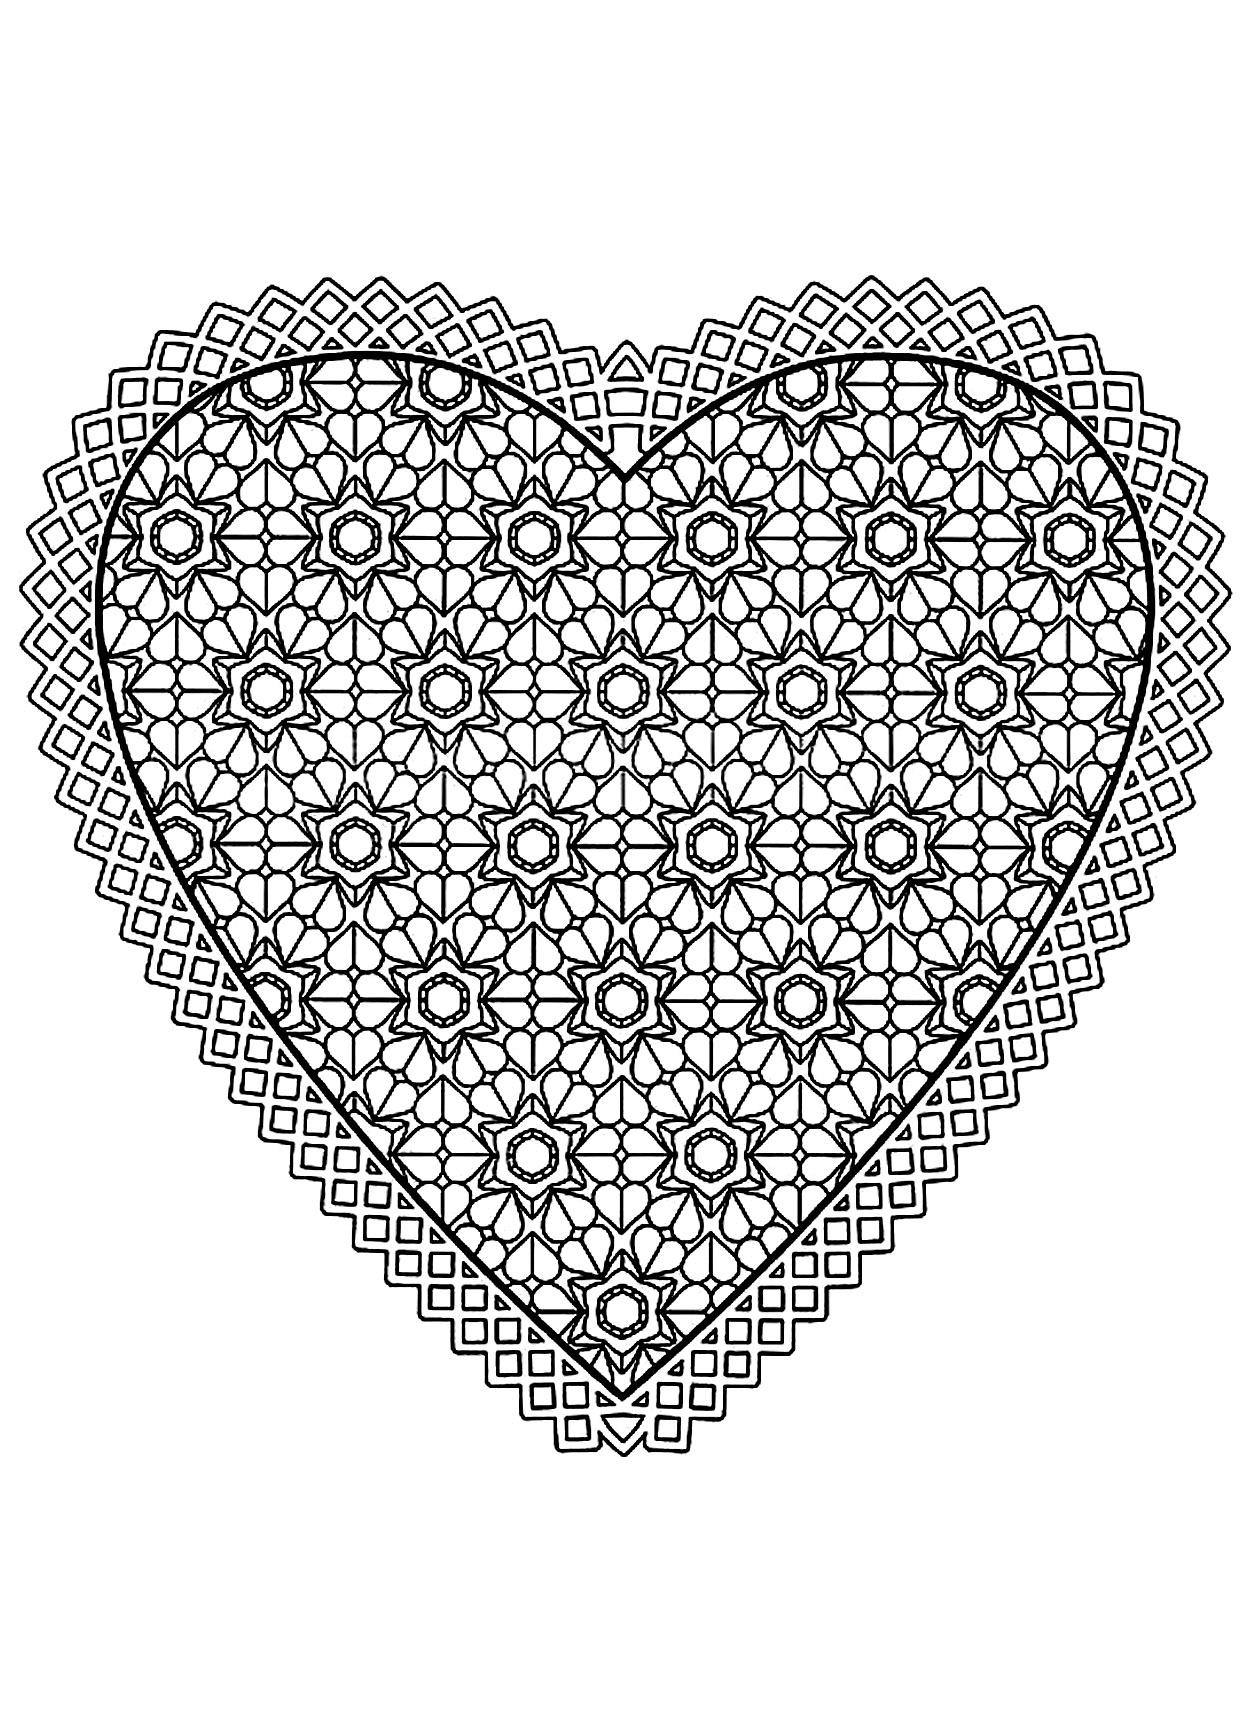 Mandala with the shape of an heart